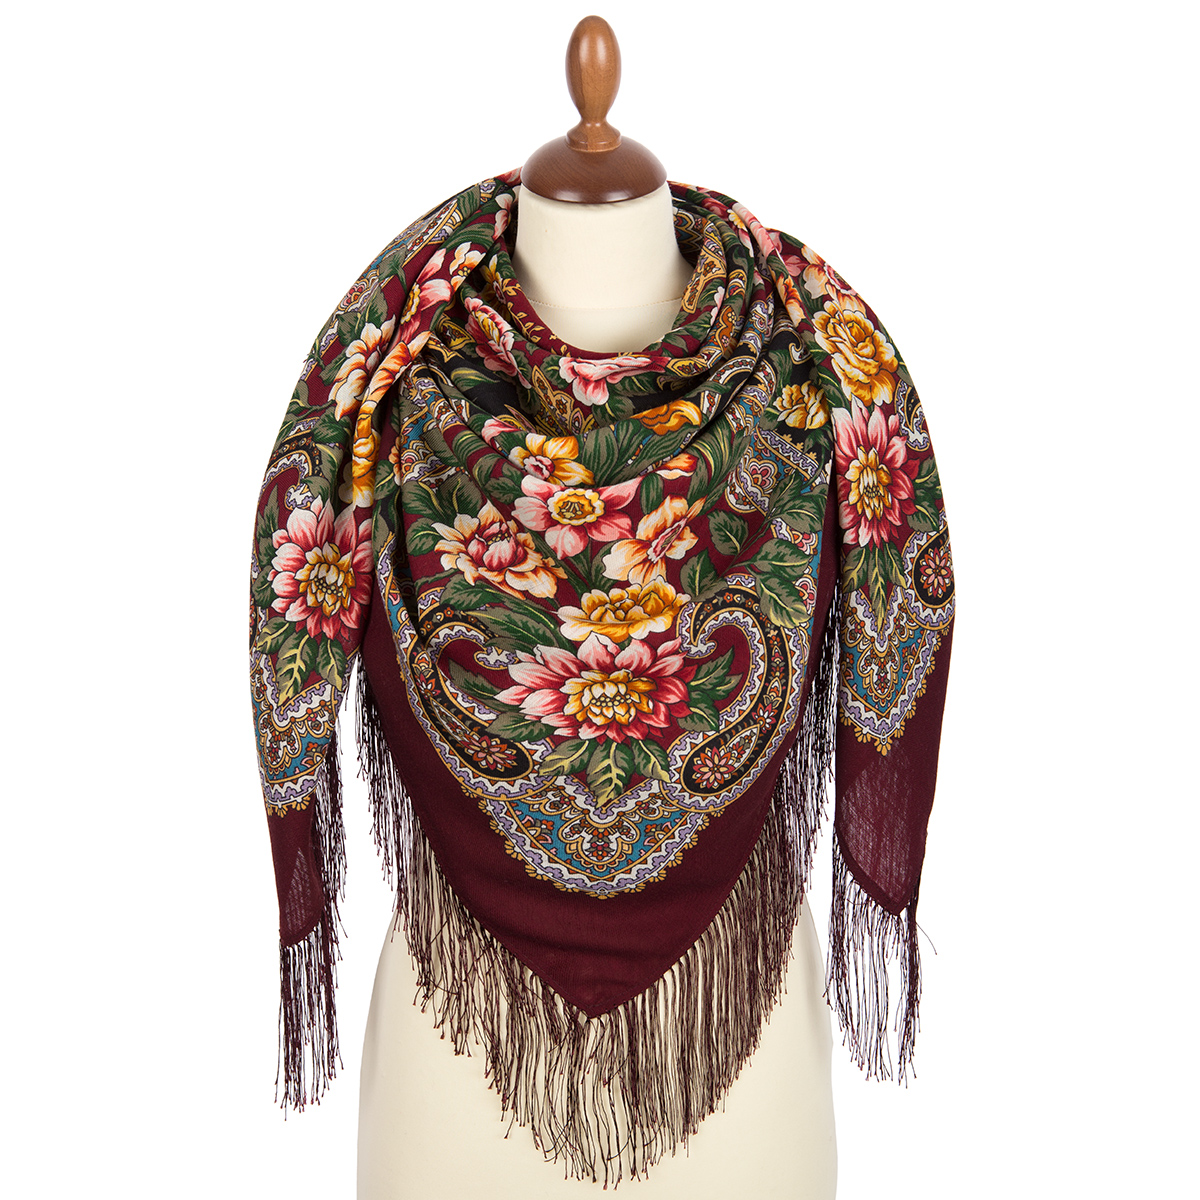 Russian shawl Land of Springs, wool, garnet - 125x125cm